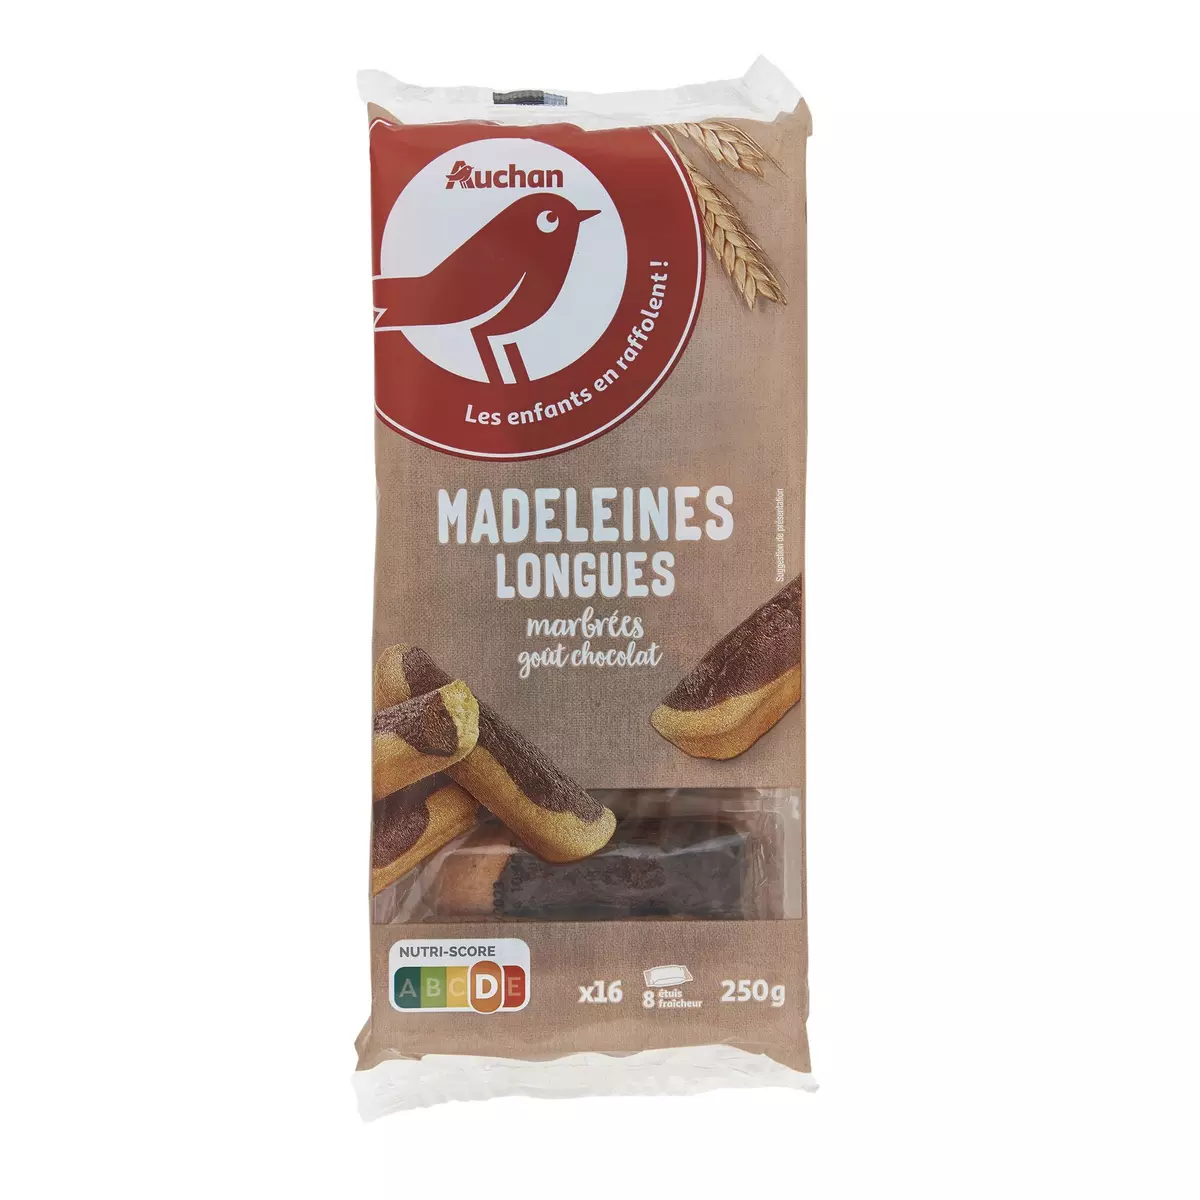 AUCHAN Madeleines longues marbrées goût chocolat sachets fraîcheur 8x2 madeleines 250g